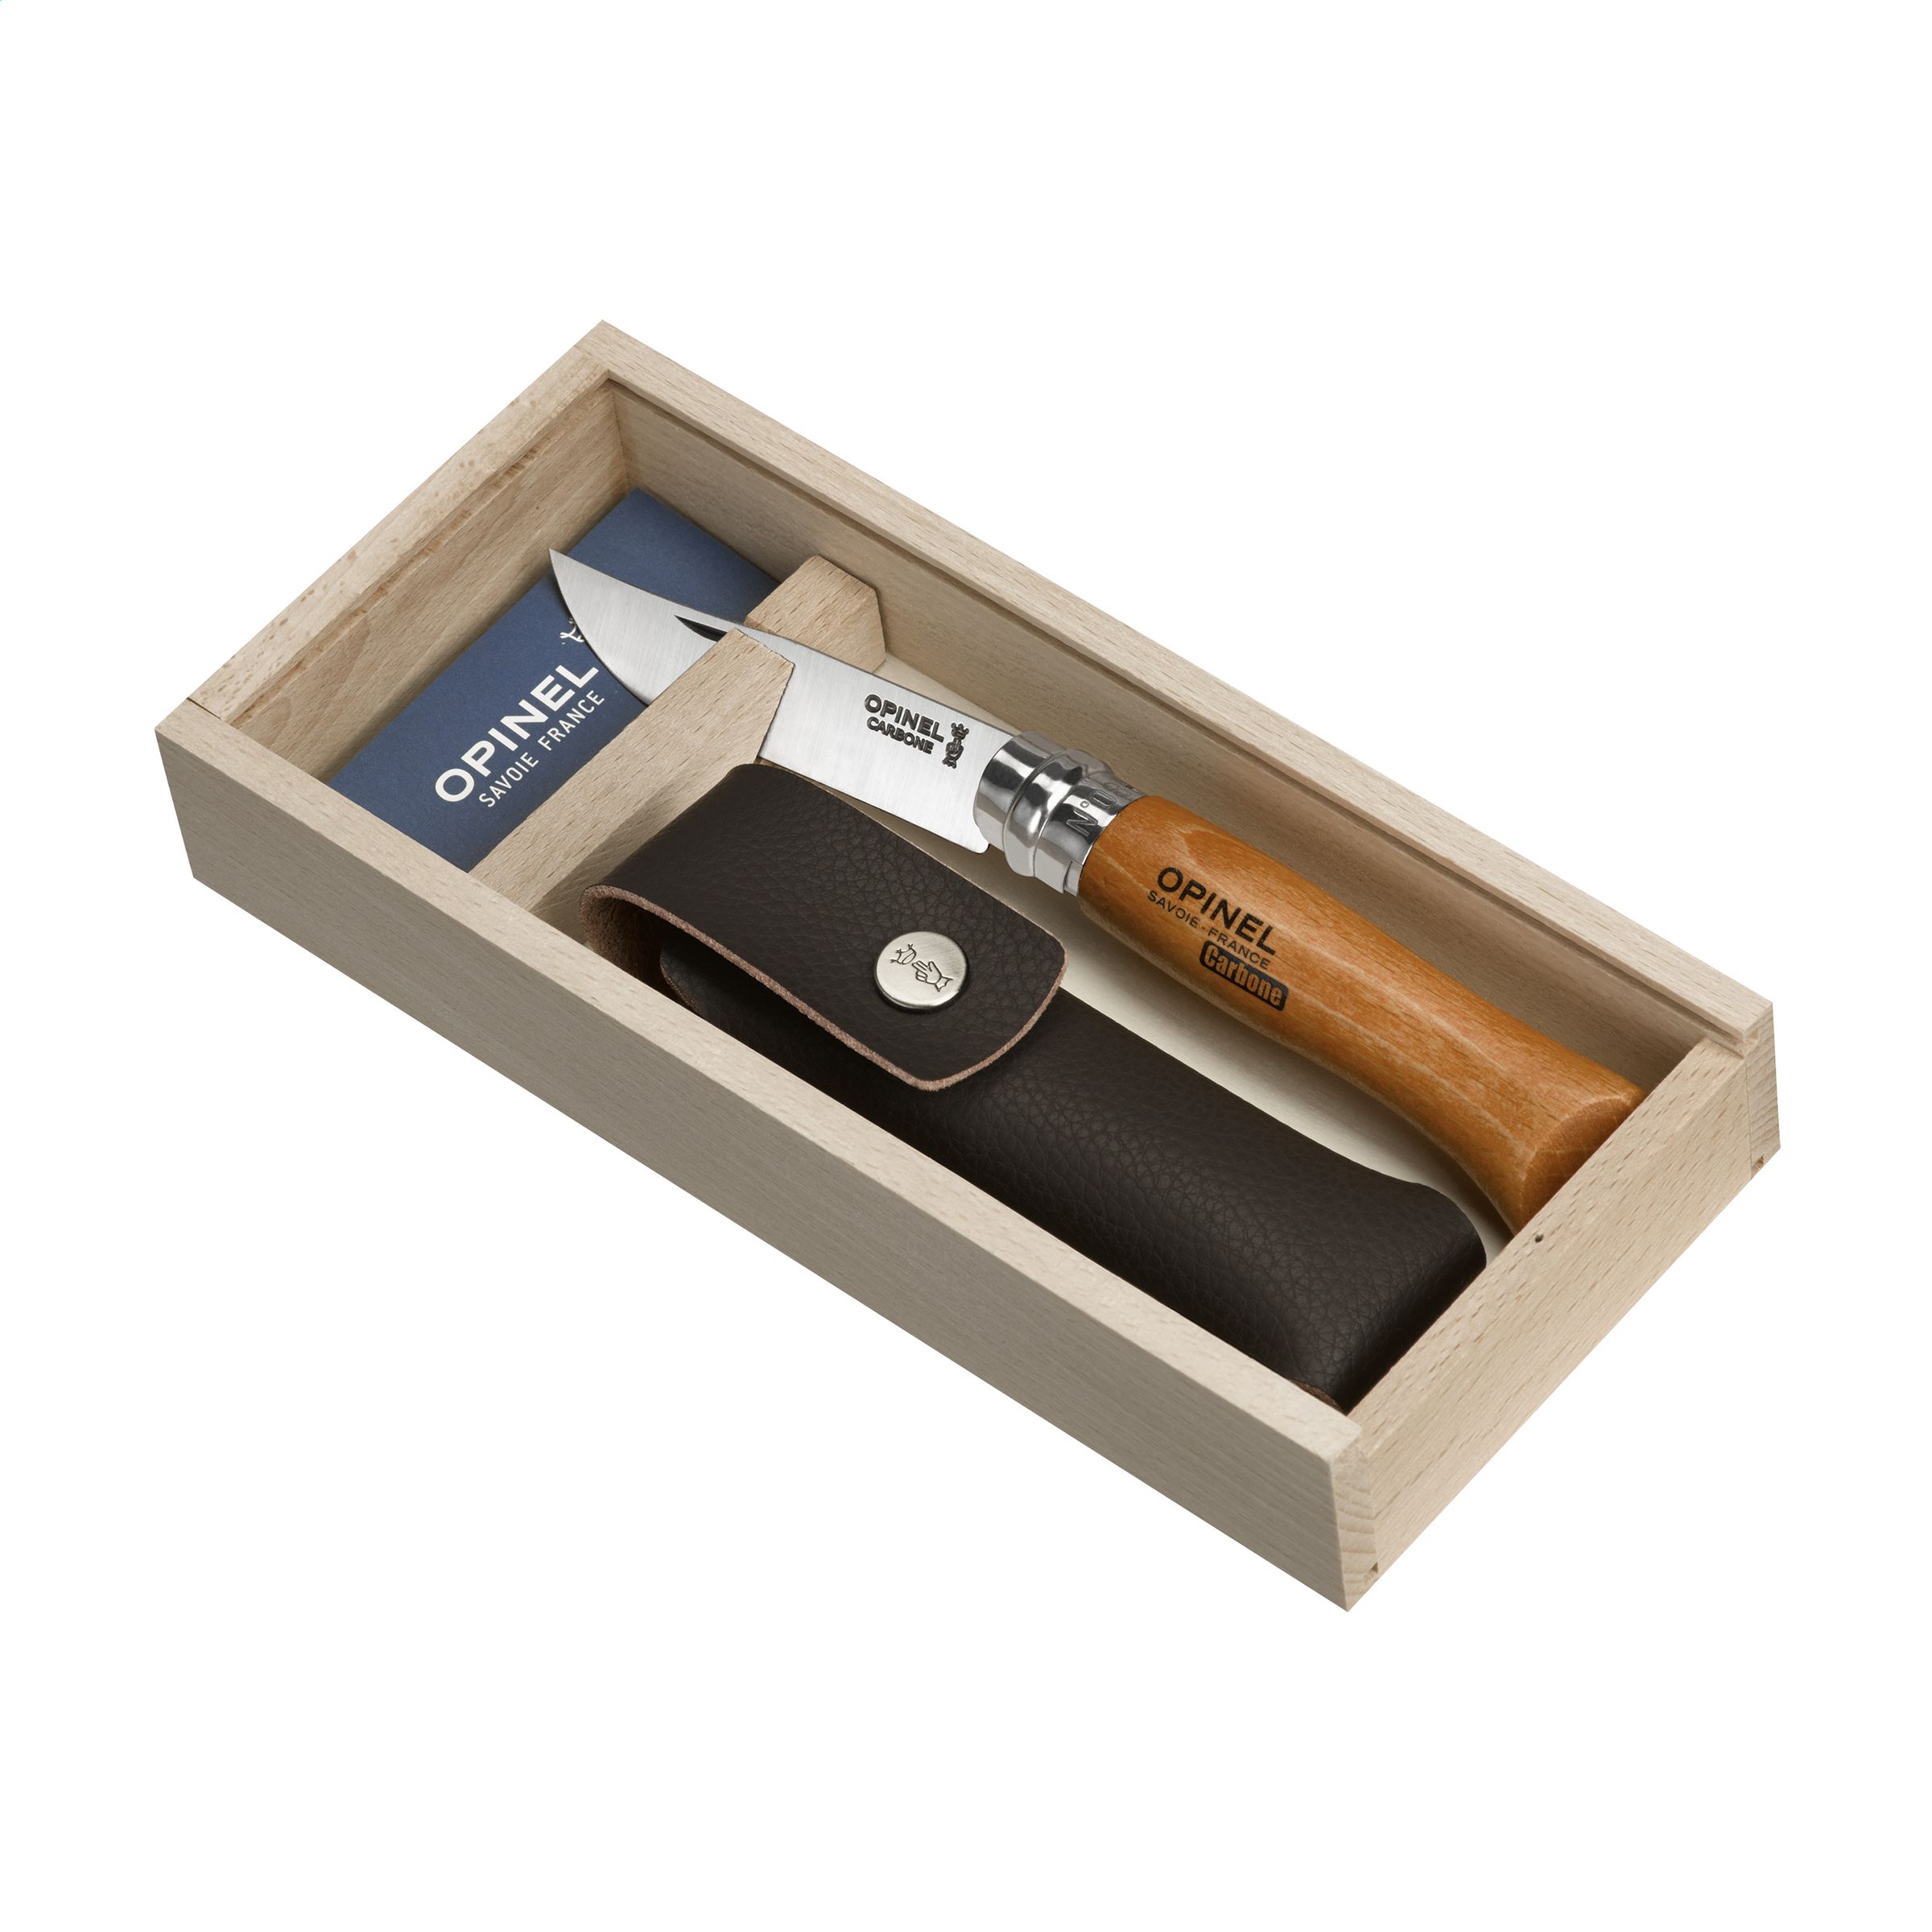 French wooden blade pocket knife - Shipton-under-Wychwood - Adstock